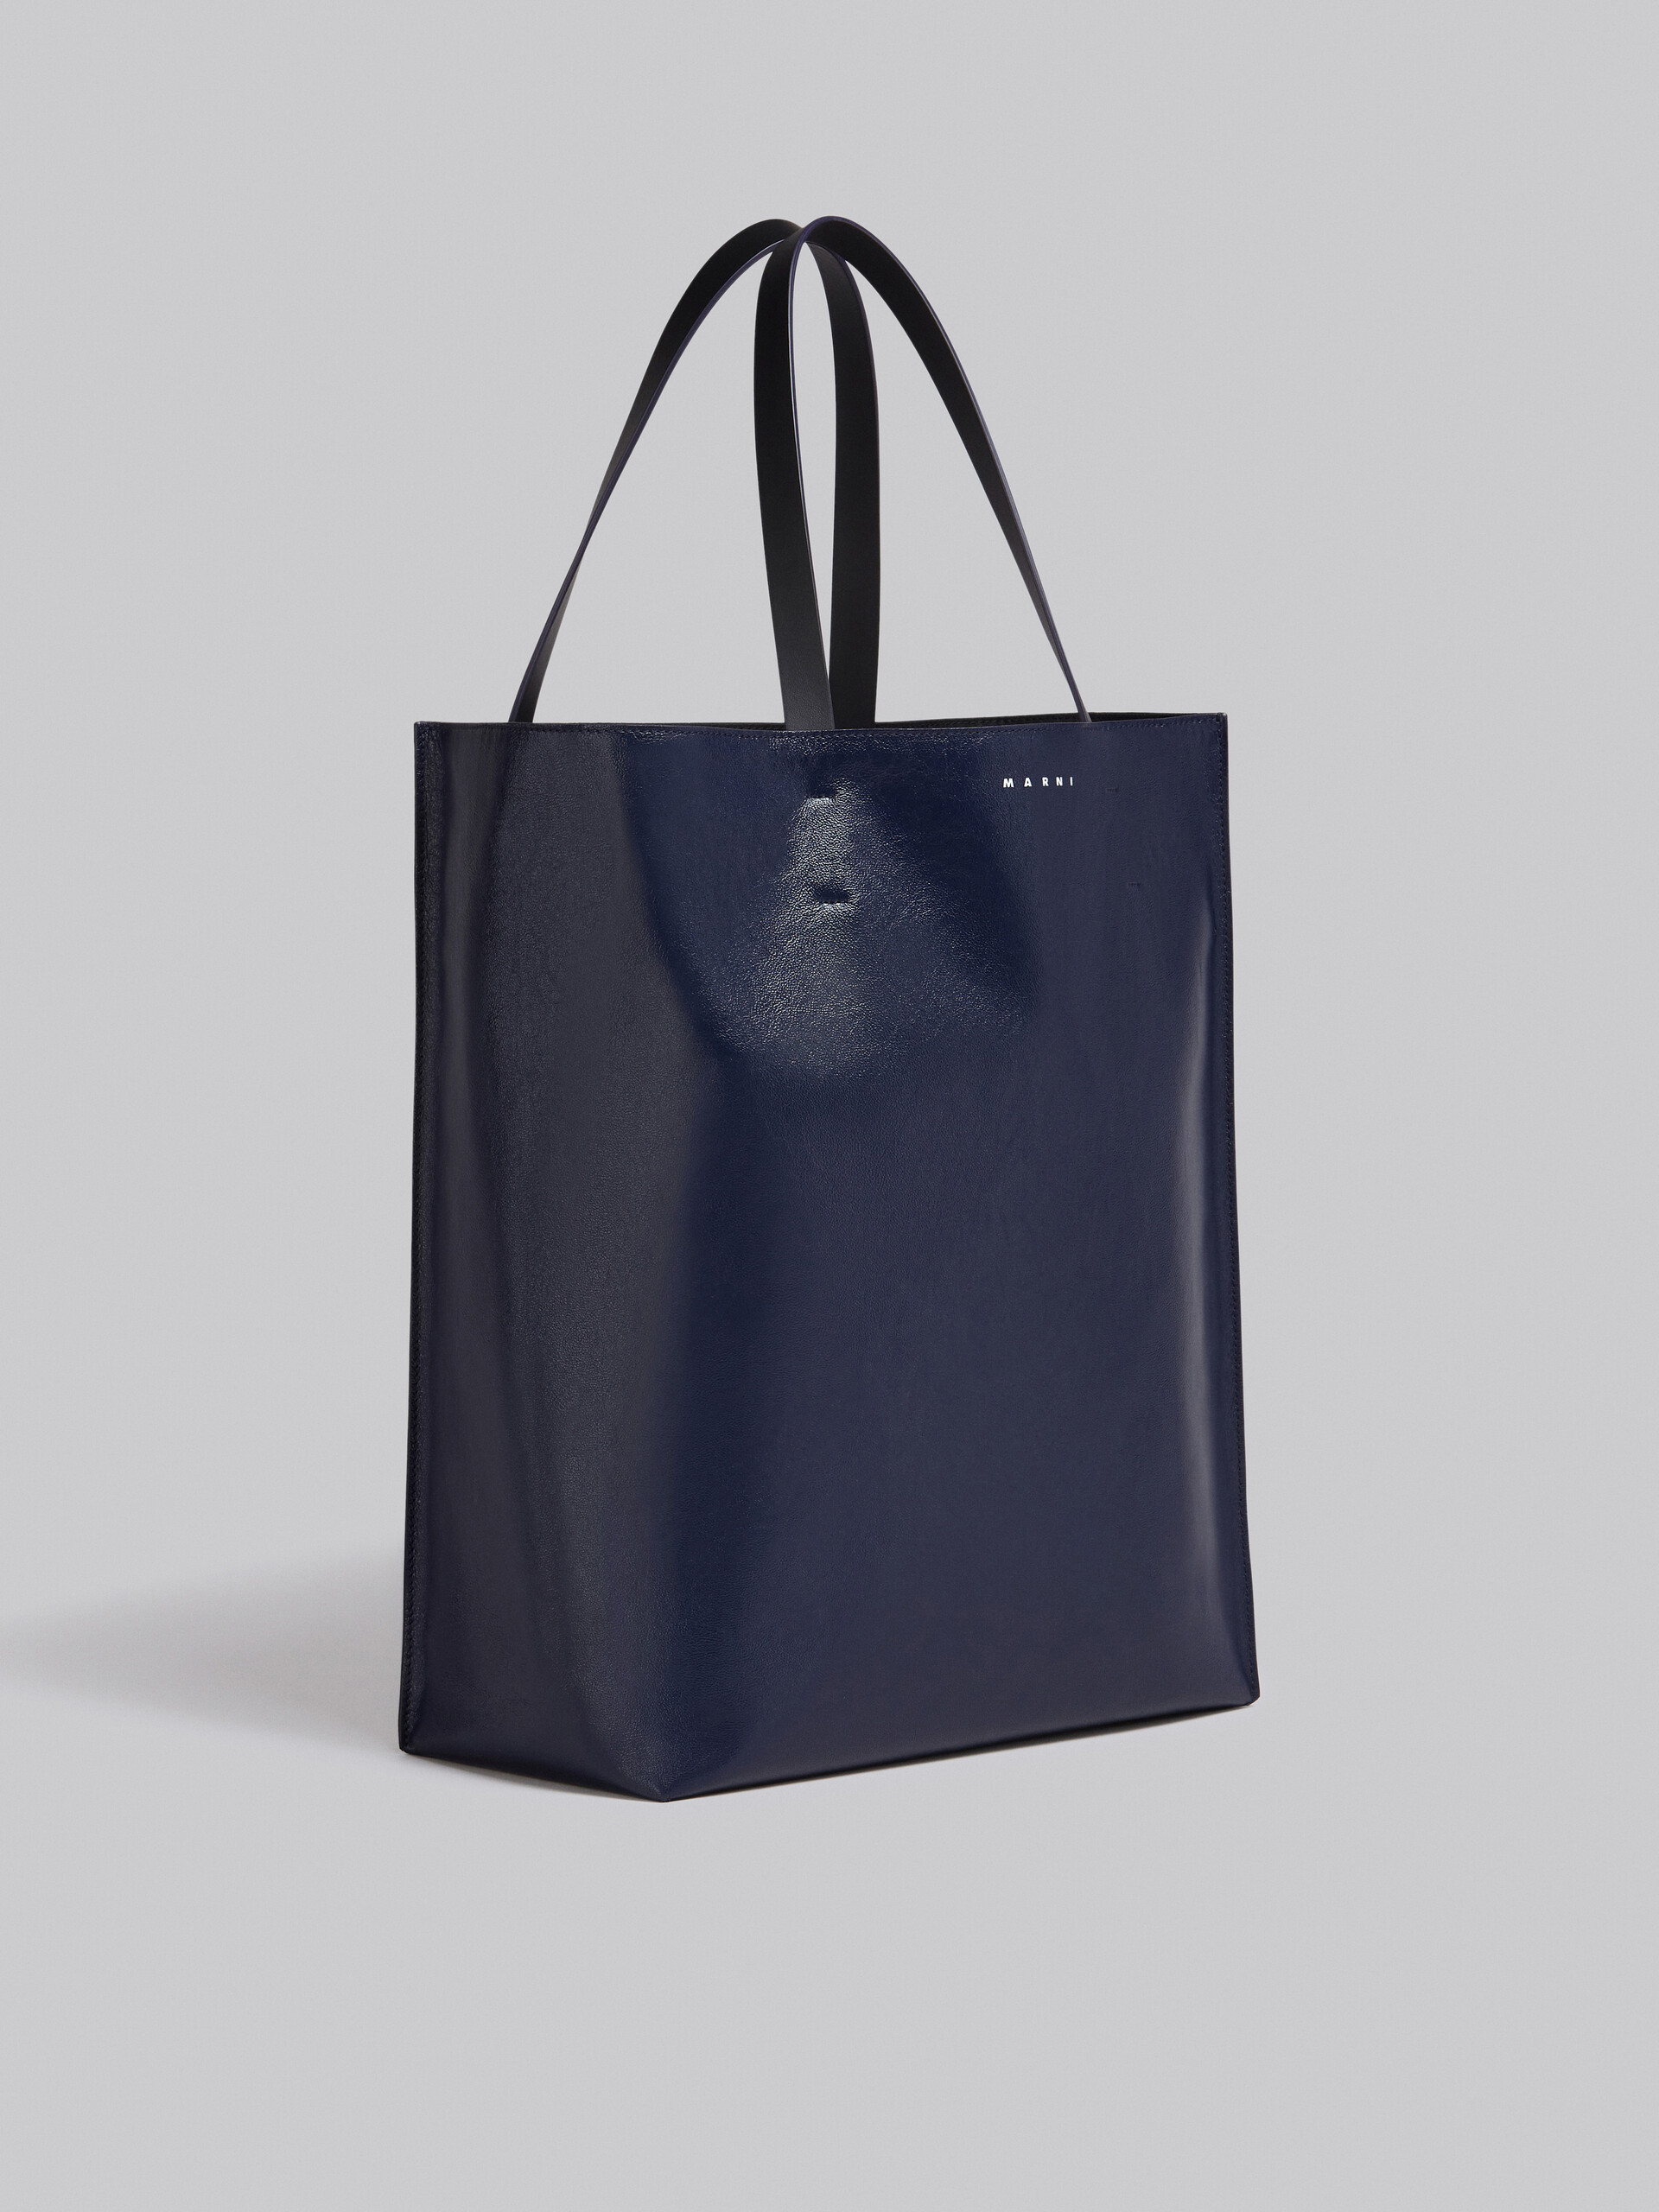 Museo Soft Bag Grande in pelle nera e blu - Borse shopping - Image 6